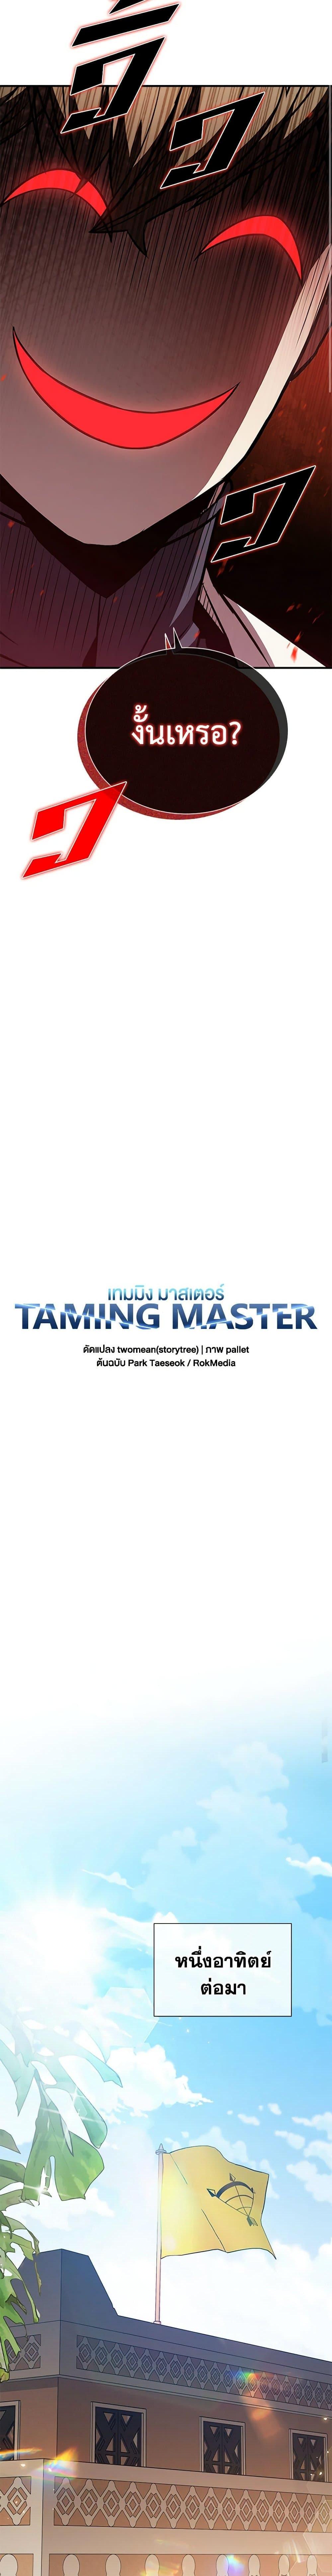 Taming Master 106 07